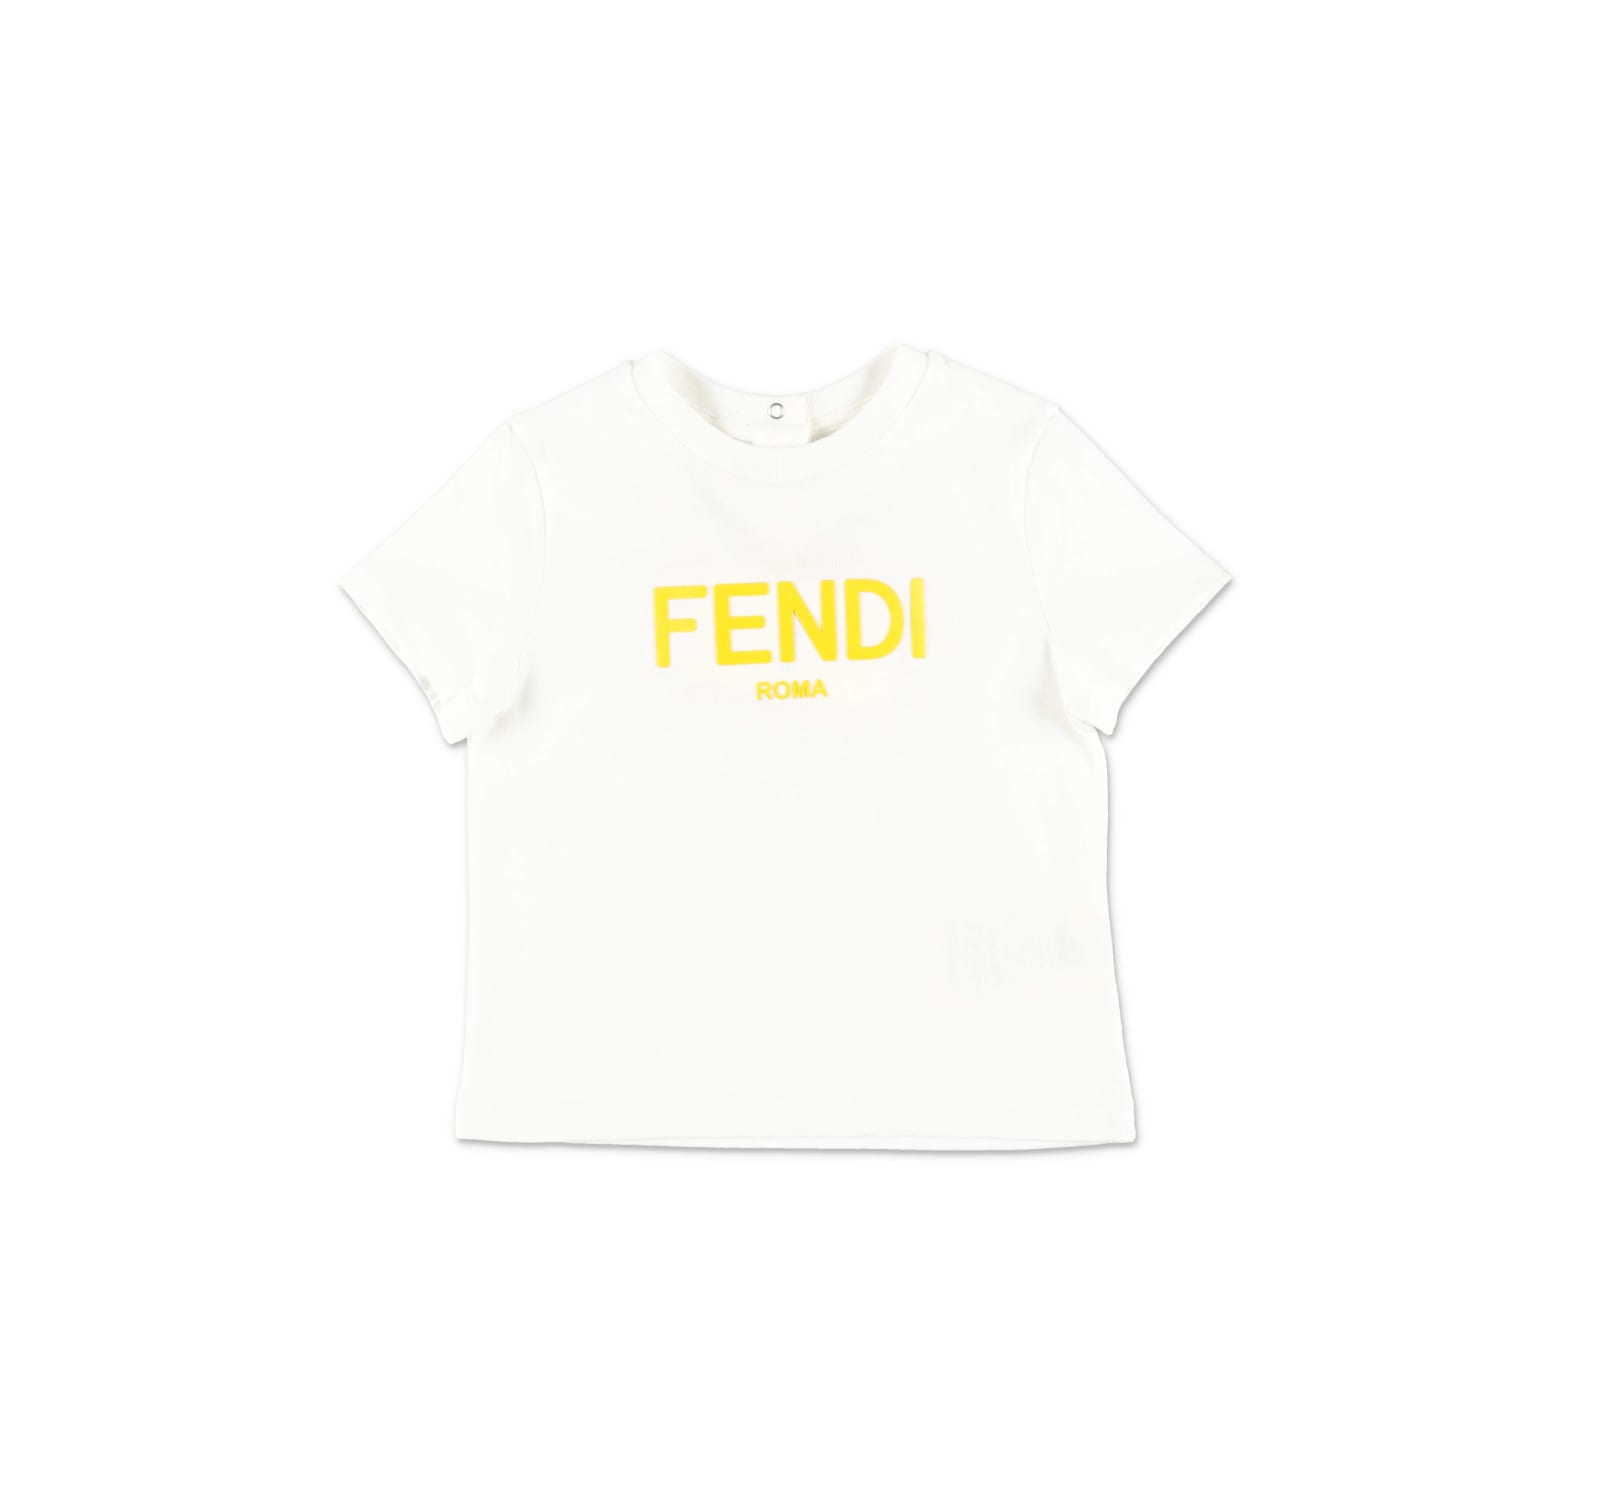 FENDI FENDI T-SHIRT BIANCA IN JERSEY DI COTONE BABY BOY